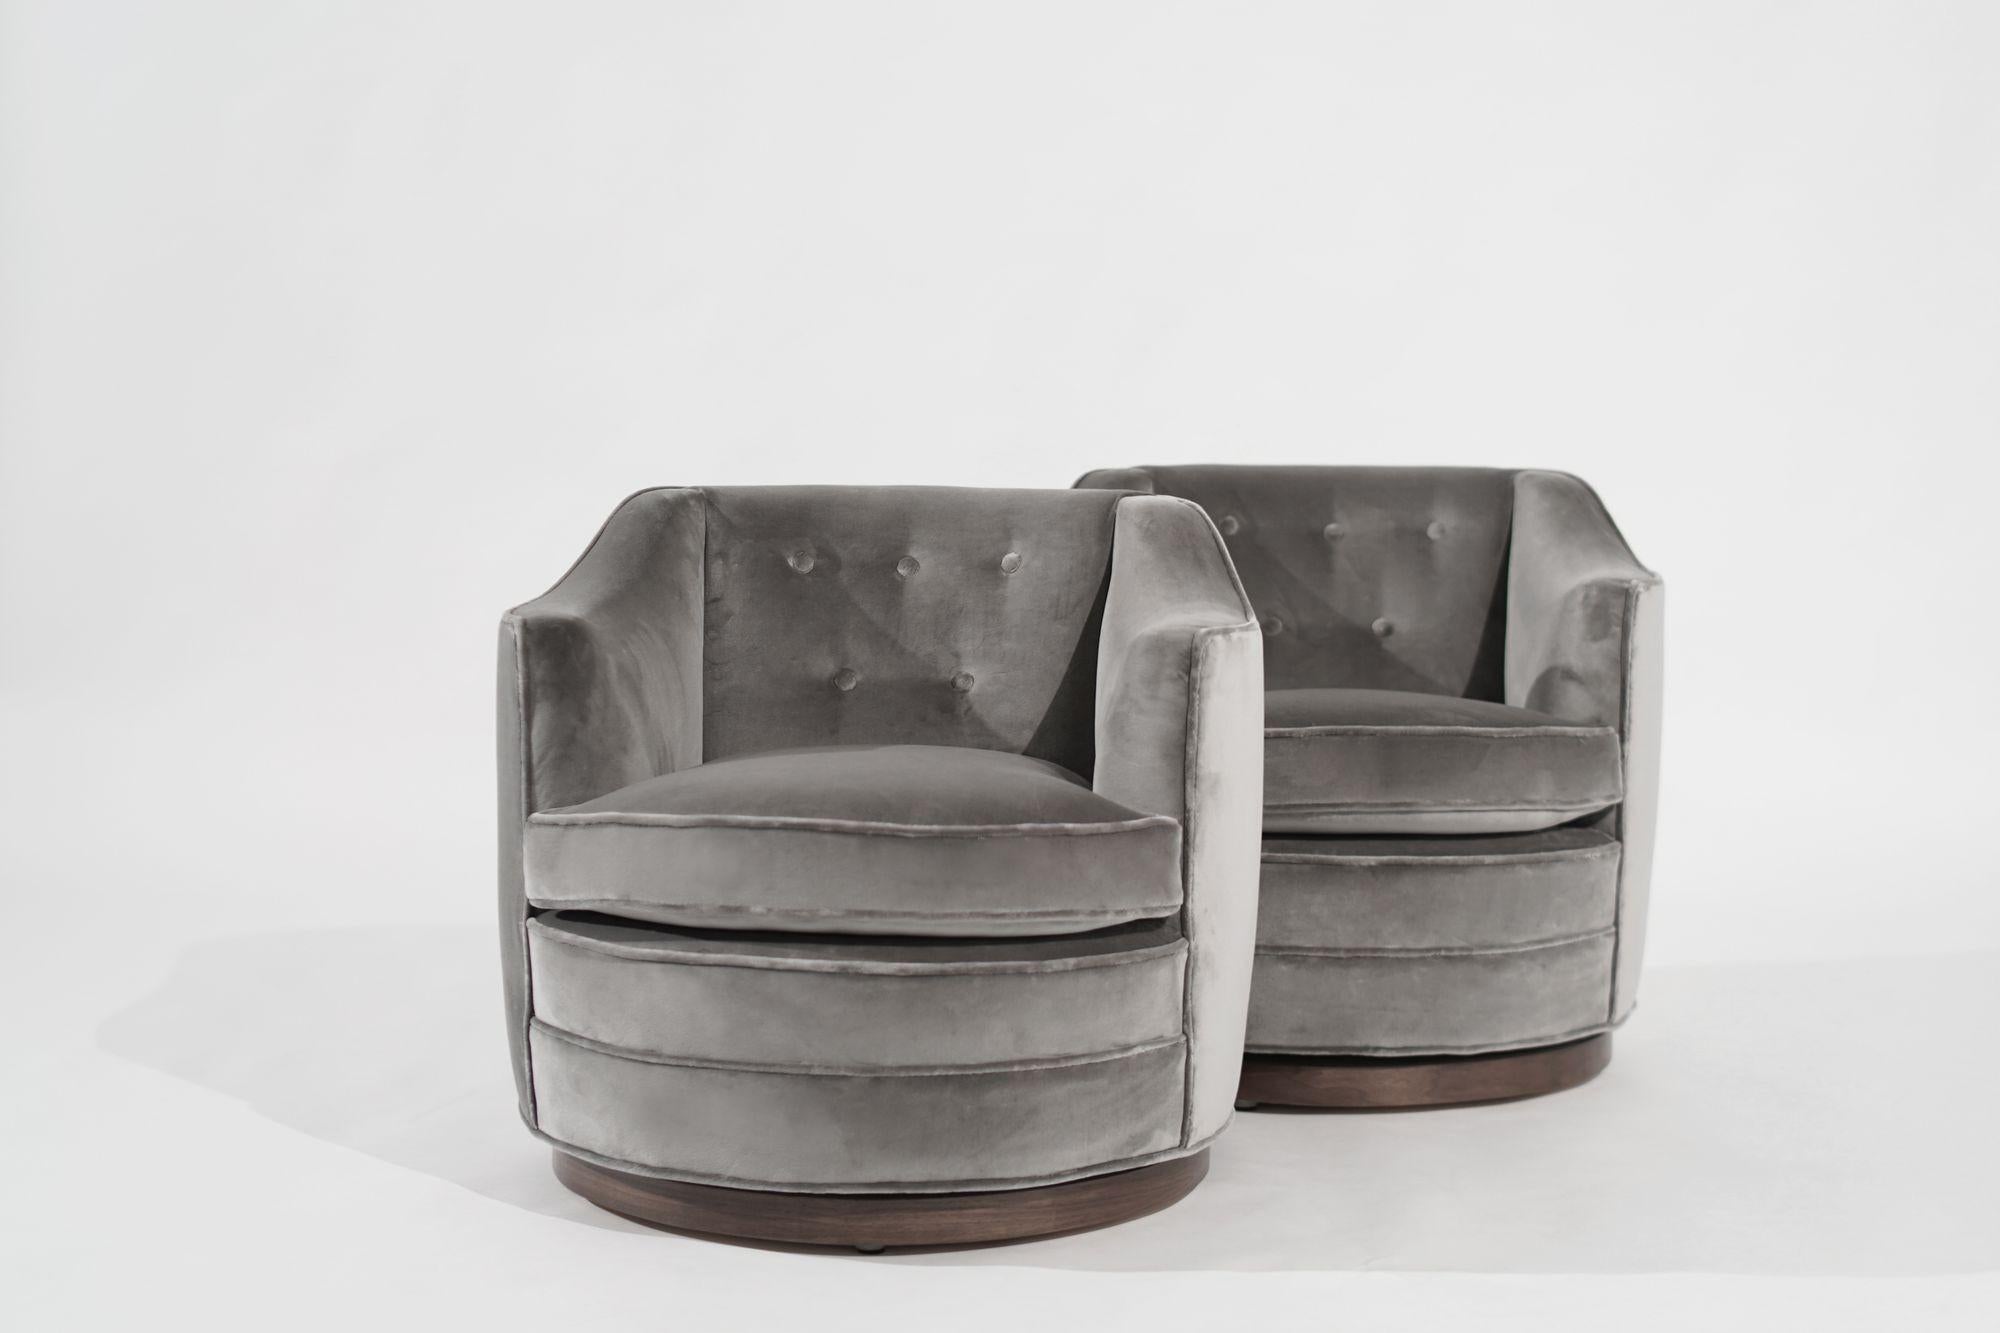 20th Century Edward Wormley for Dunbar Swivel Chairs in Grey Alpaca Velvet, C. 1950s For Sale